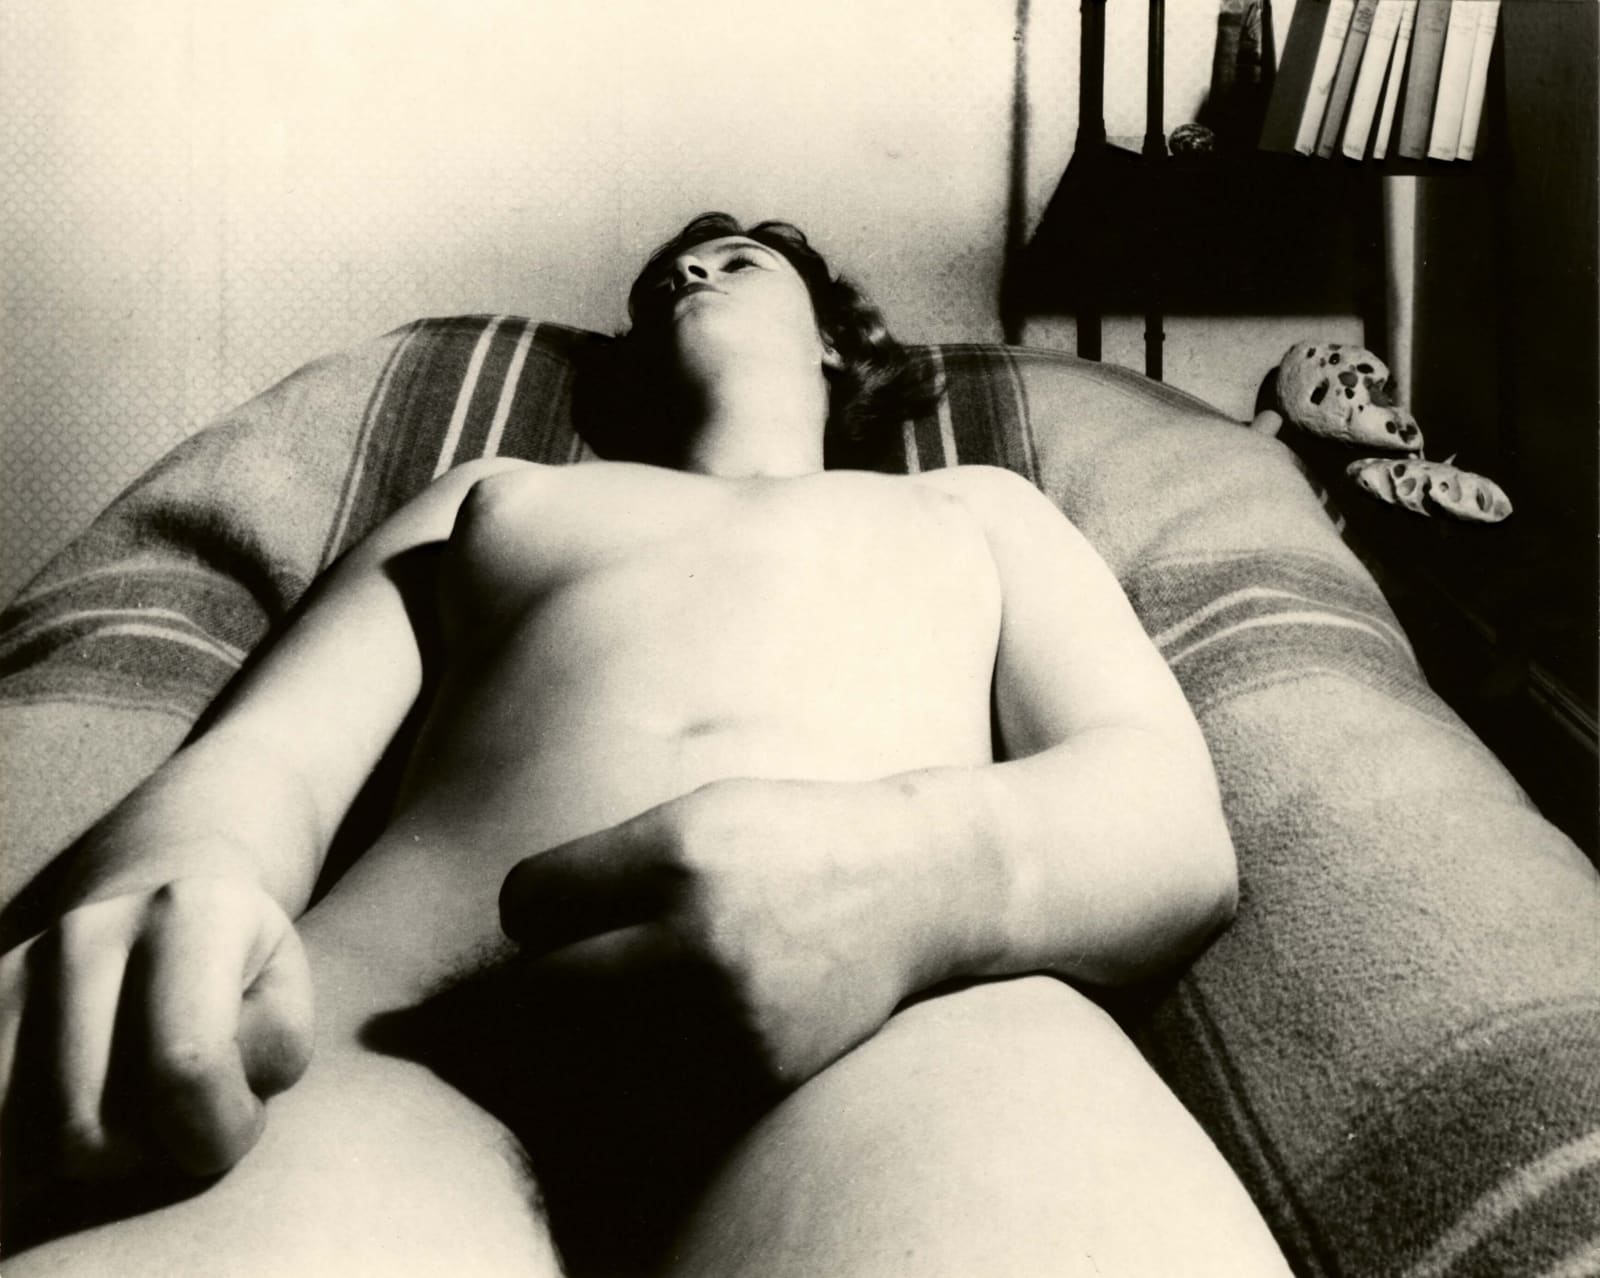 Bill Brandt, Nude, Campden Hill, London, 1956